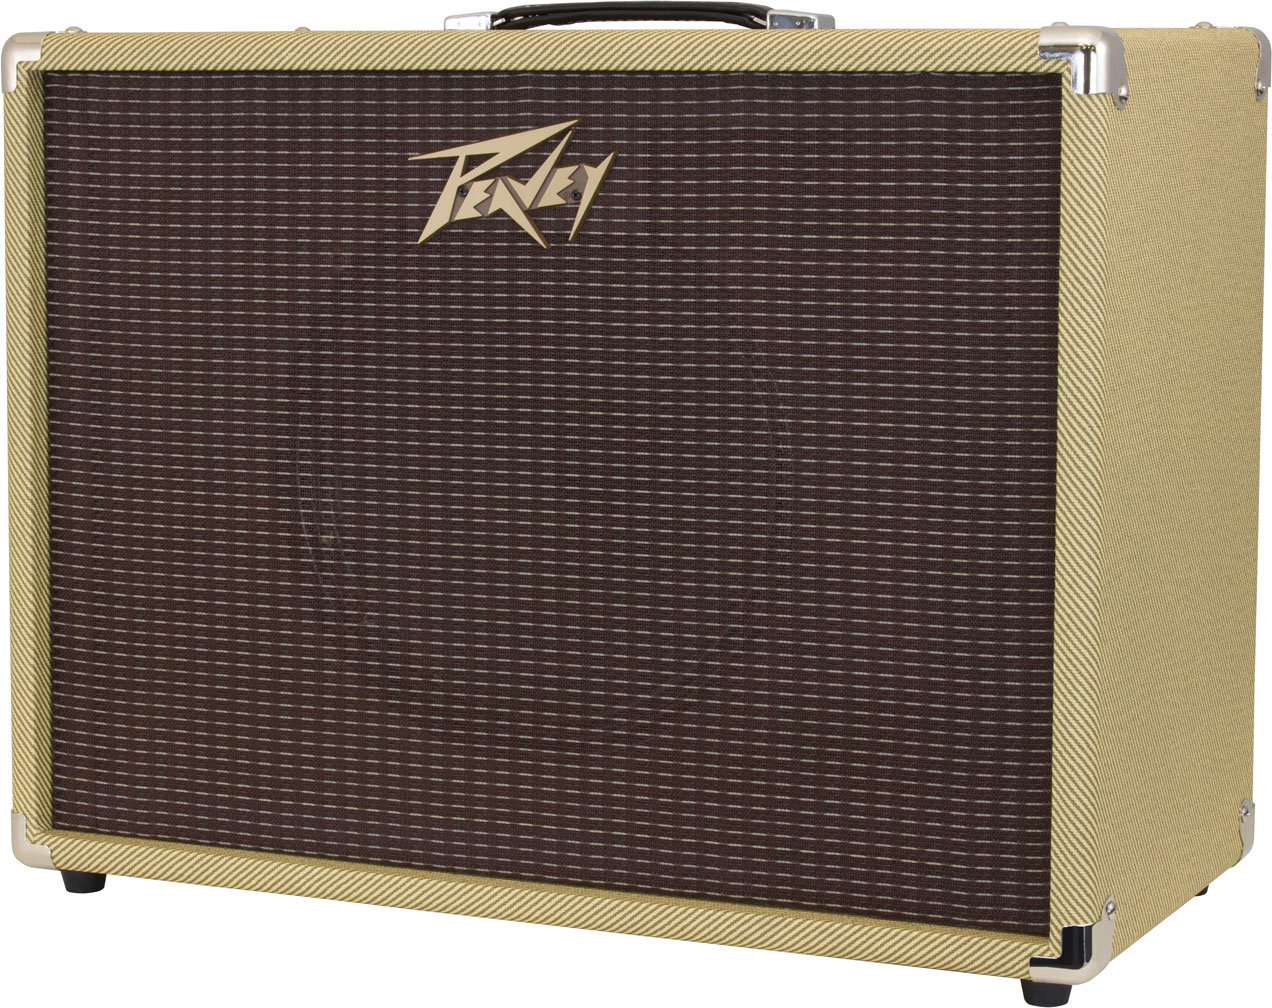 Peavey 112-c Guitar Enclosure 1x12 60w 16-ohms Tweed - Electric guitar amp cabinet - Variation 1